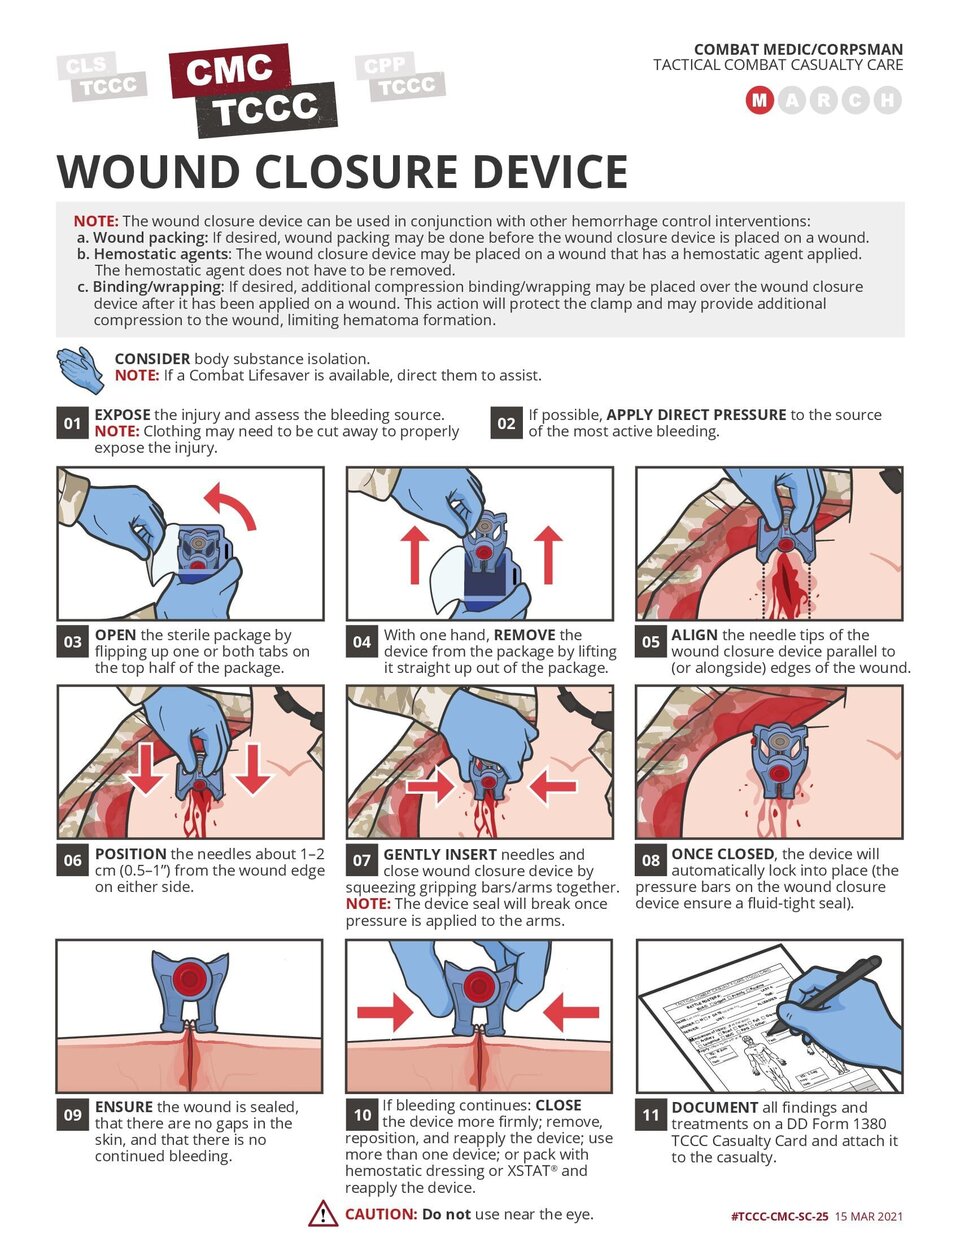 Wound closure device